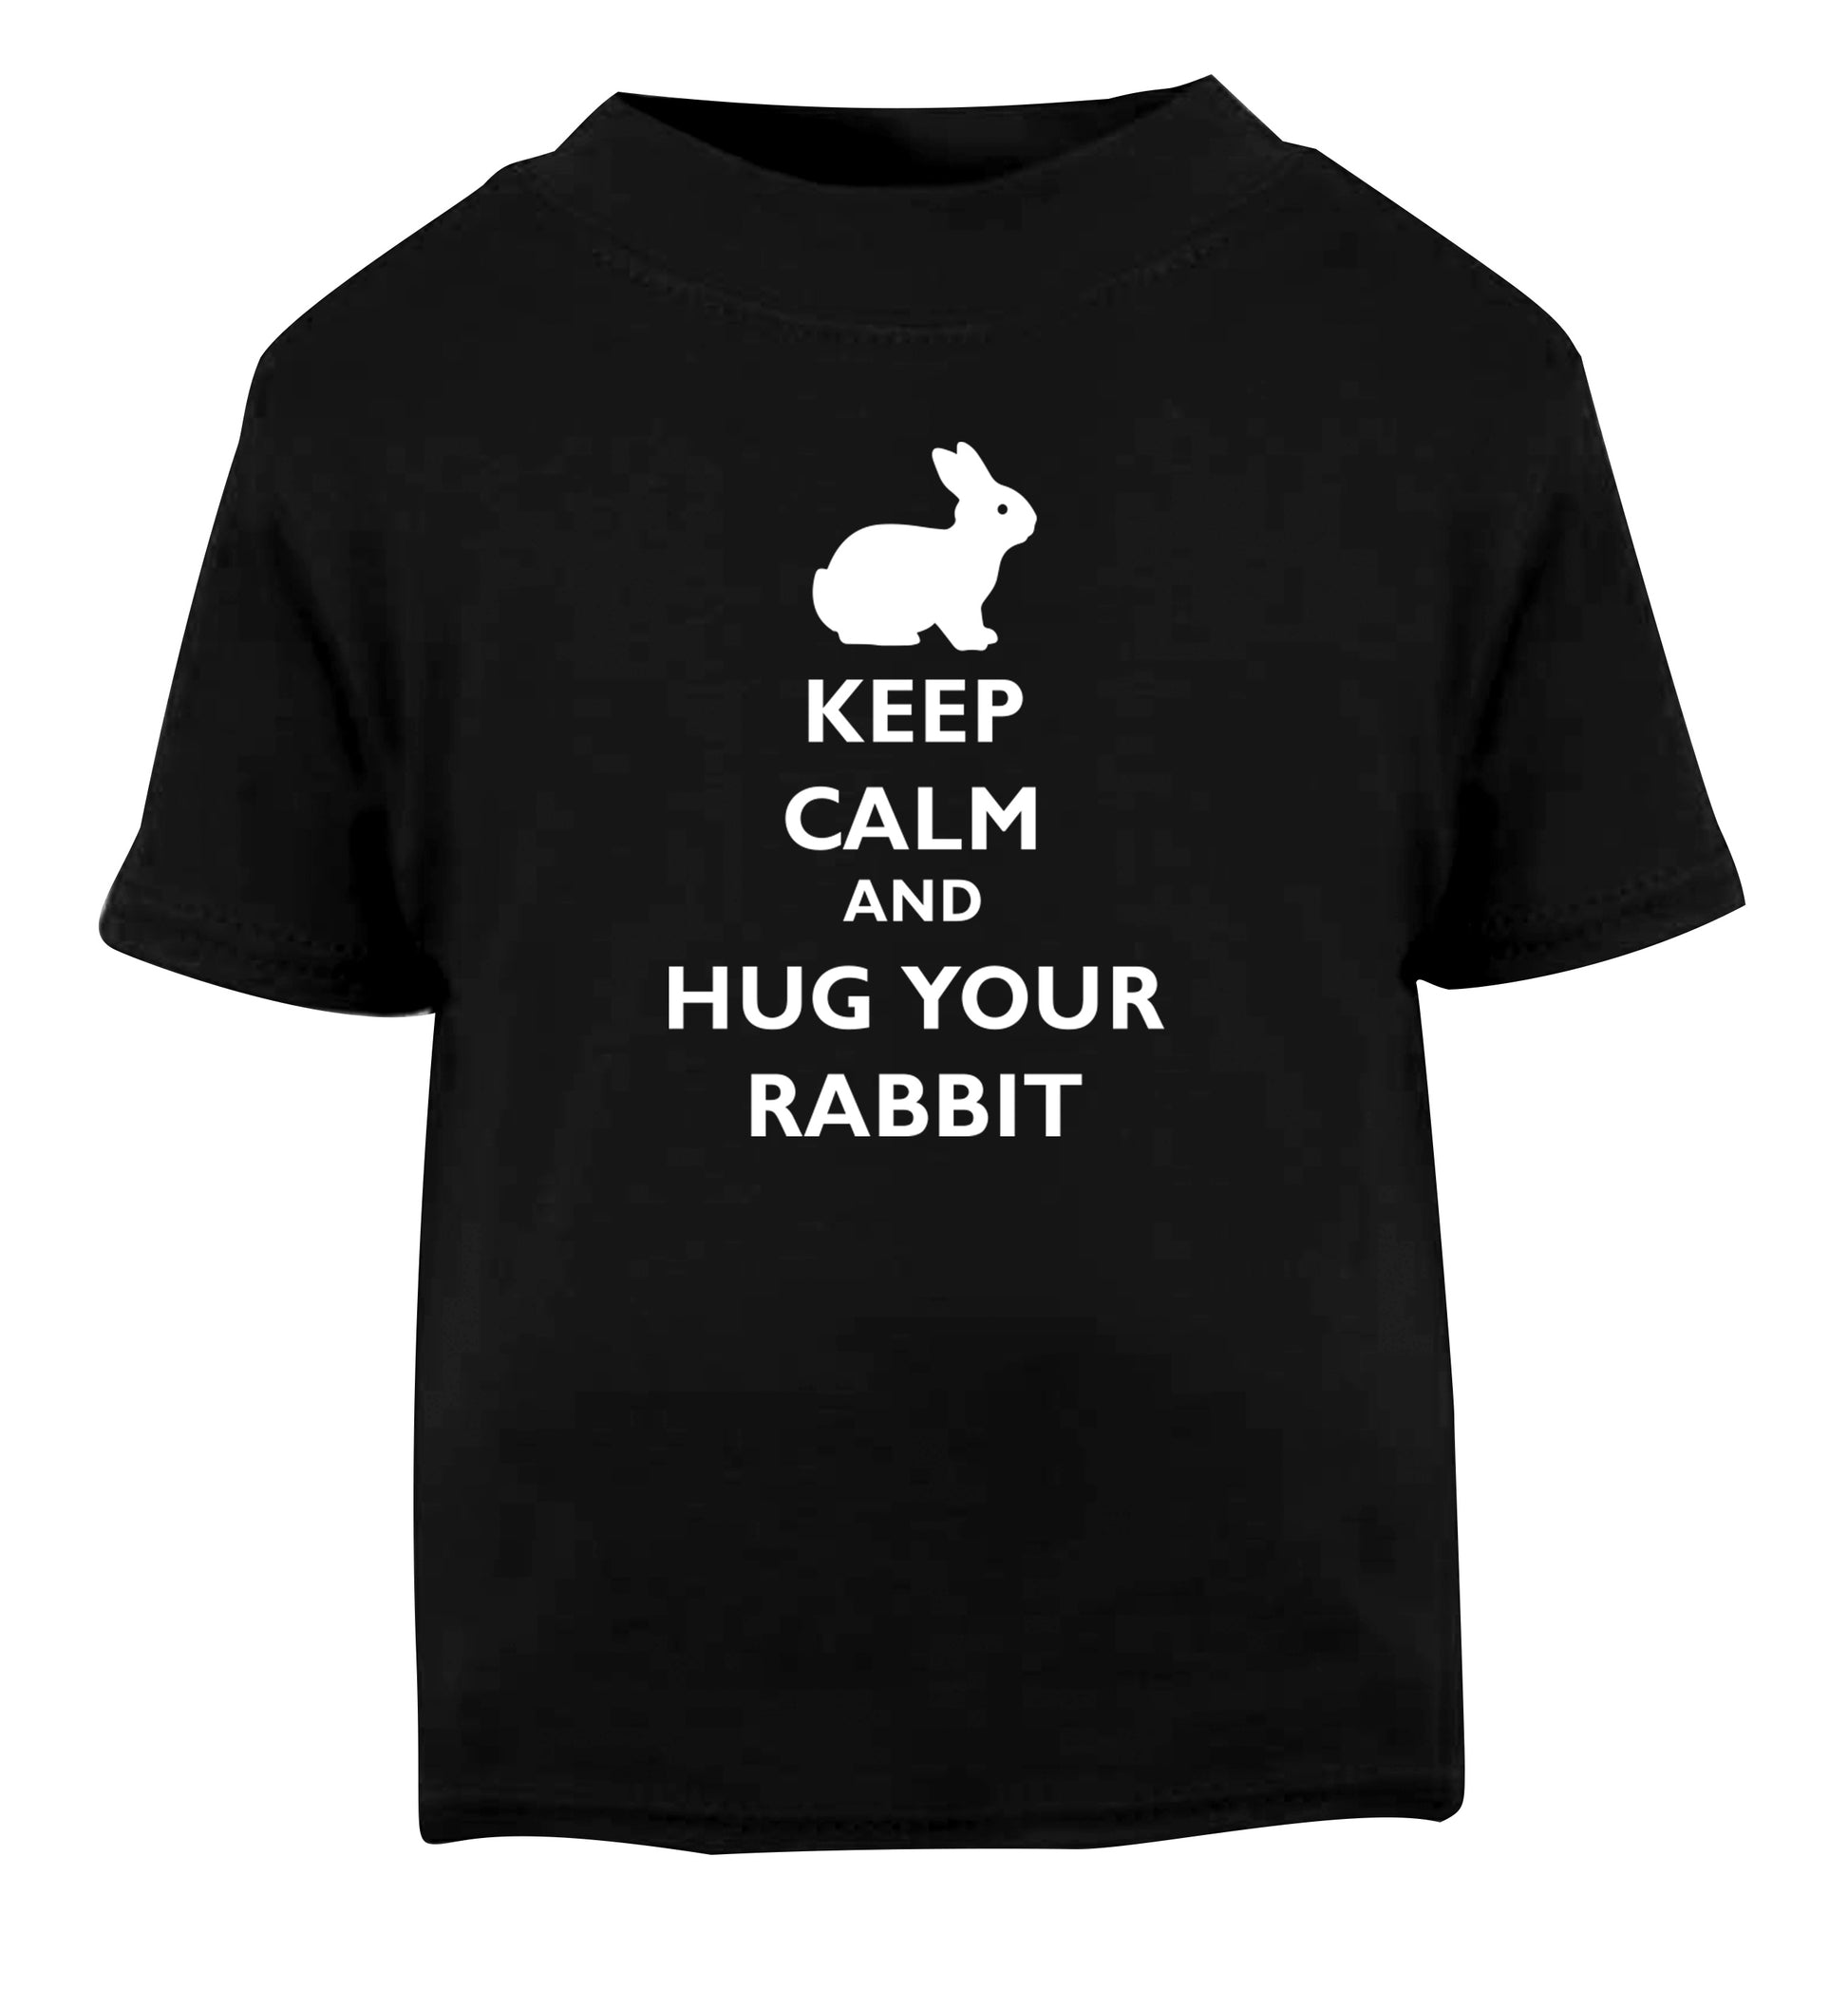 Keep calm and hug your rabbit Black Baby Toddler Tshirt 2 years